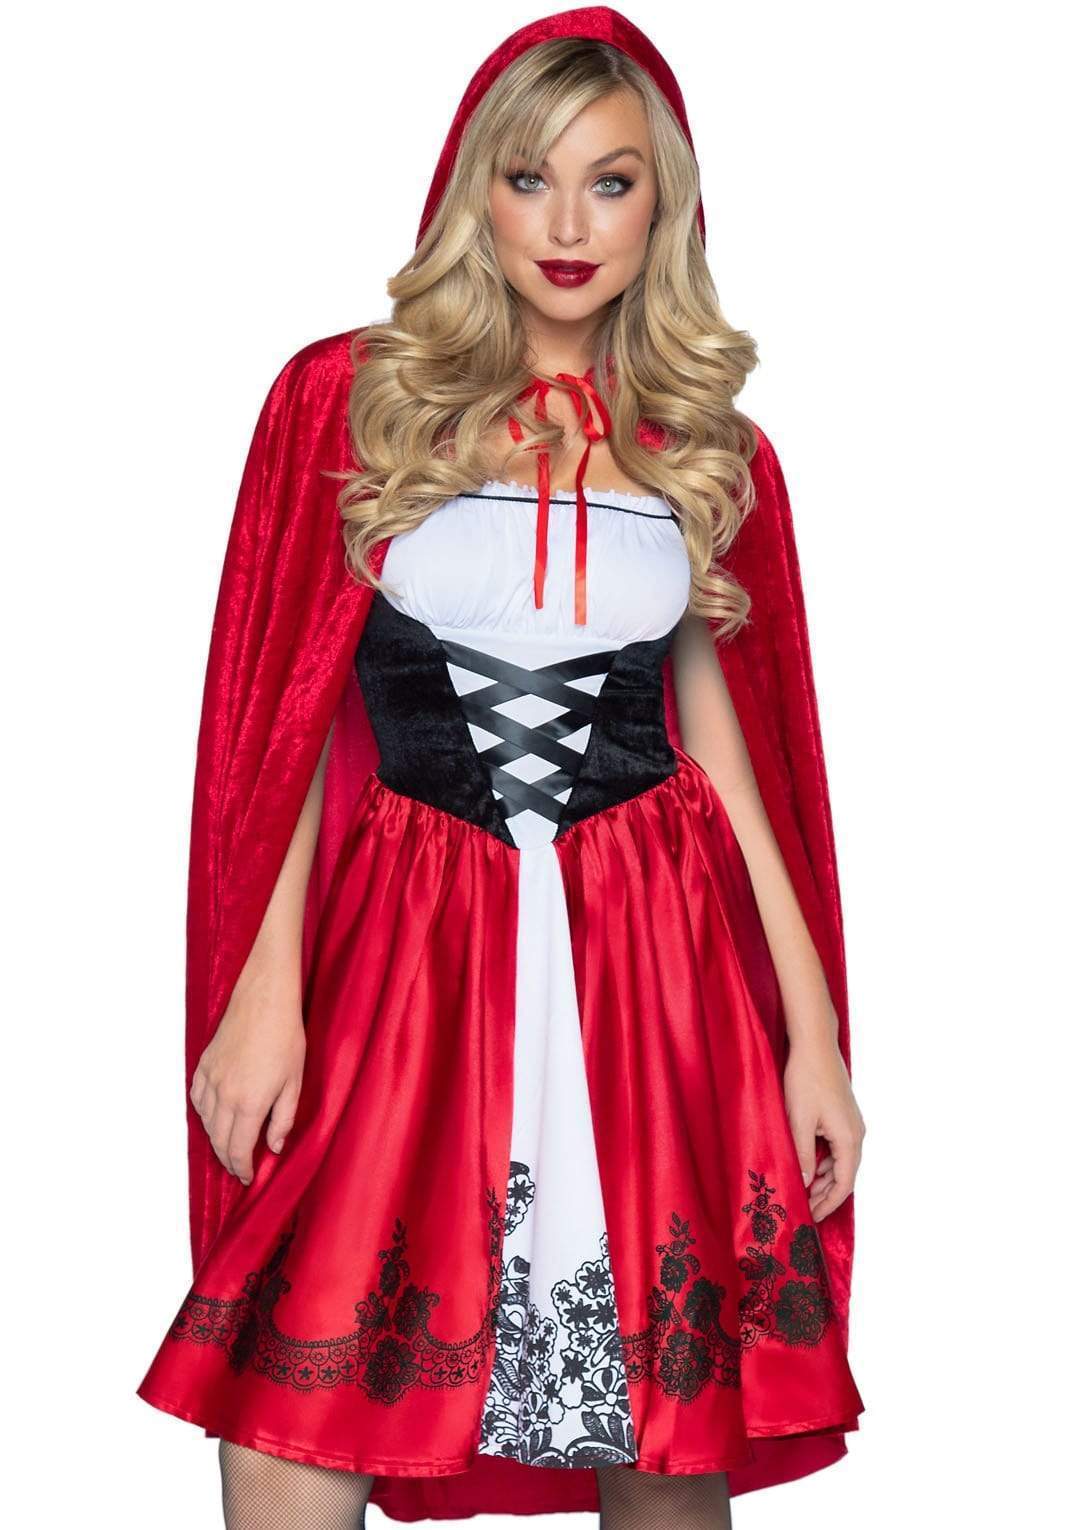 Classic Red Riding Costume, Fantasy Costumes | Avenue